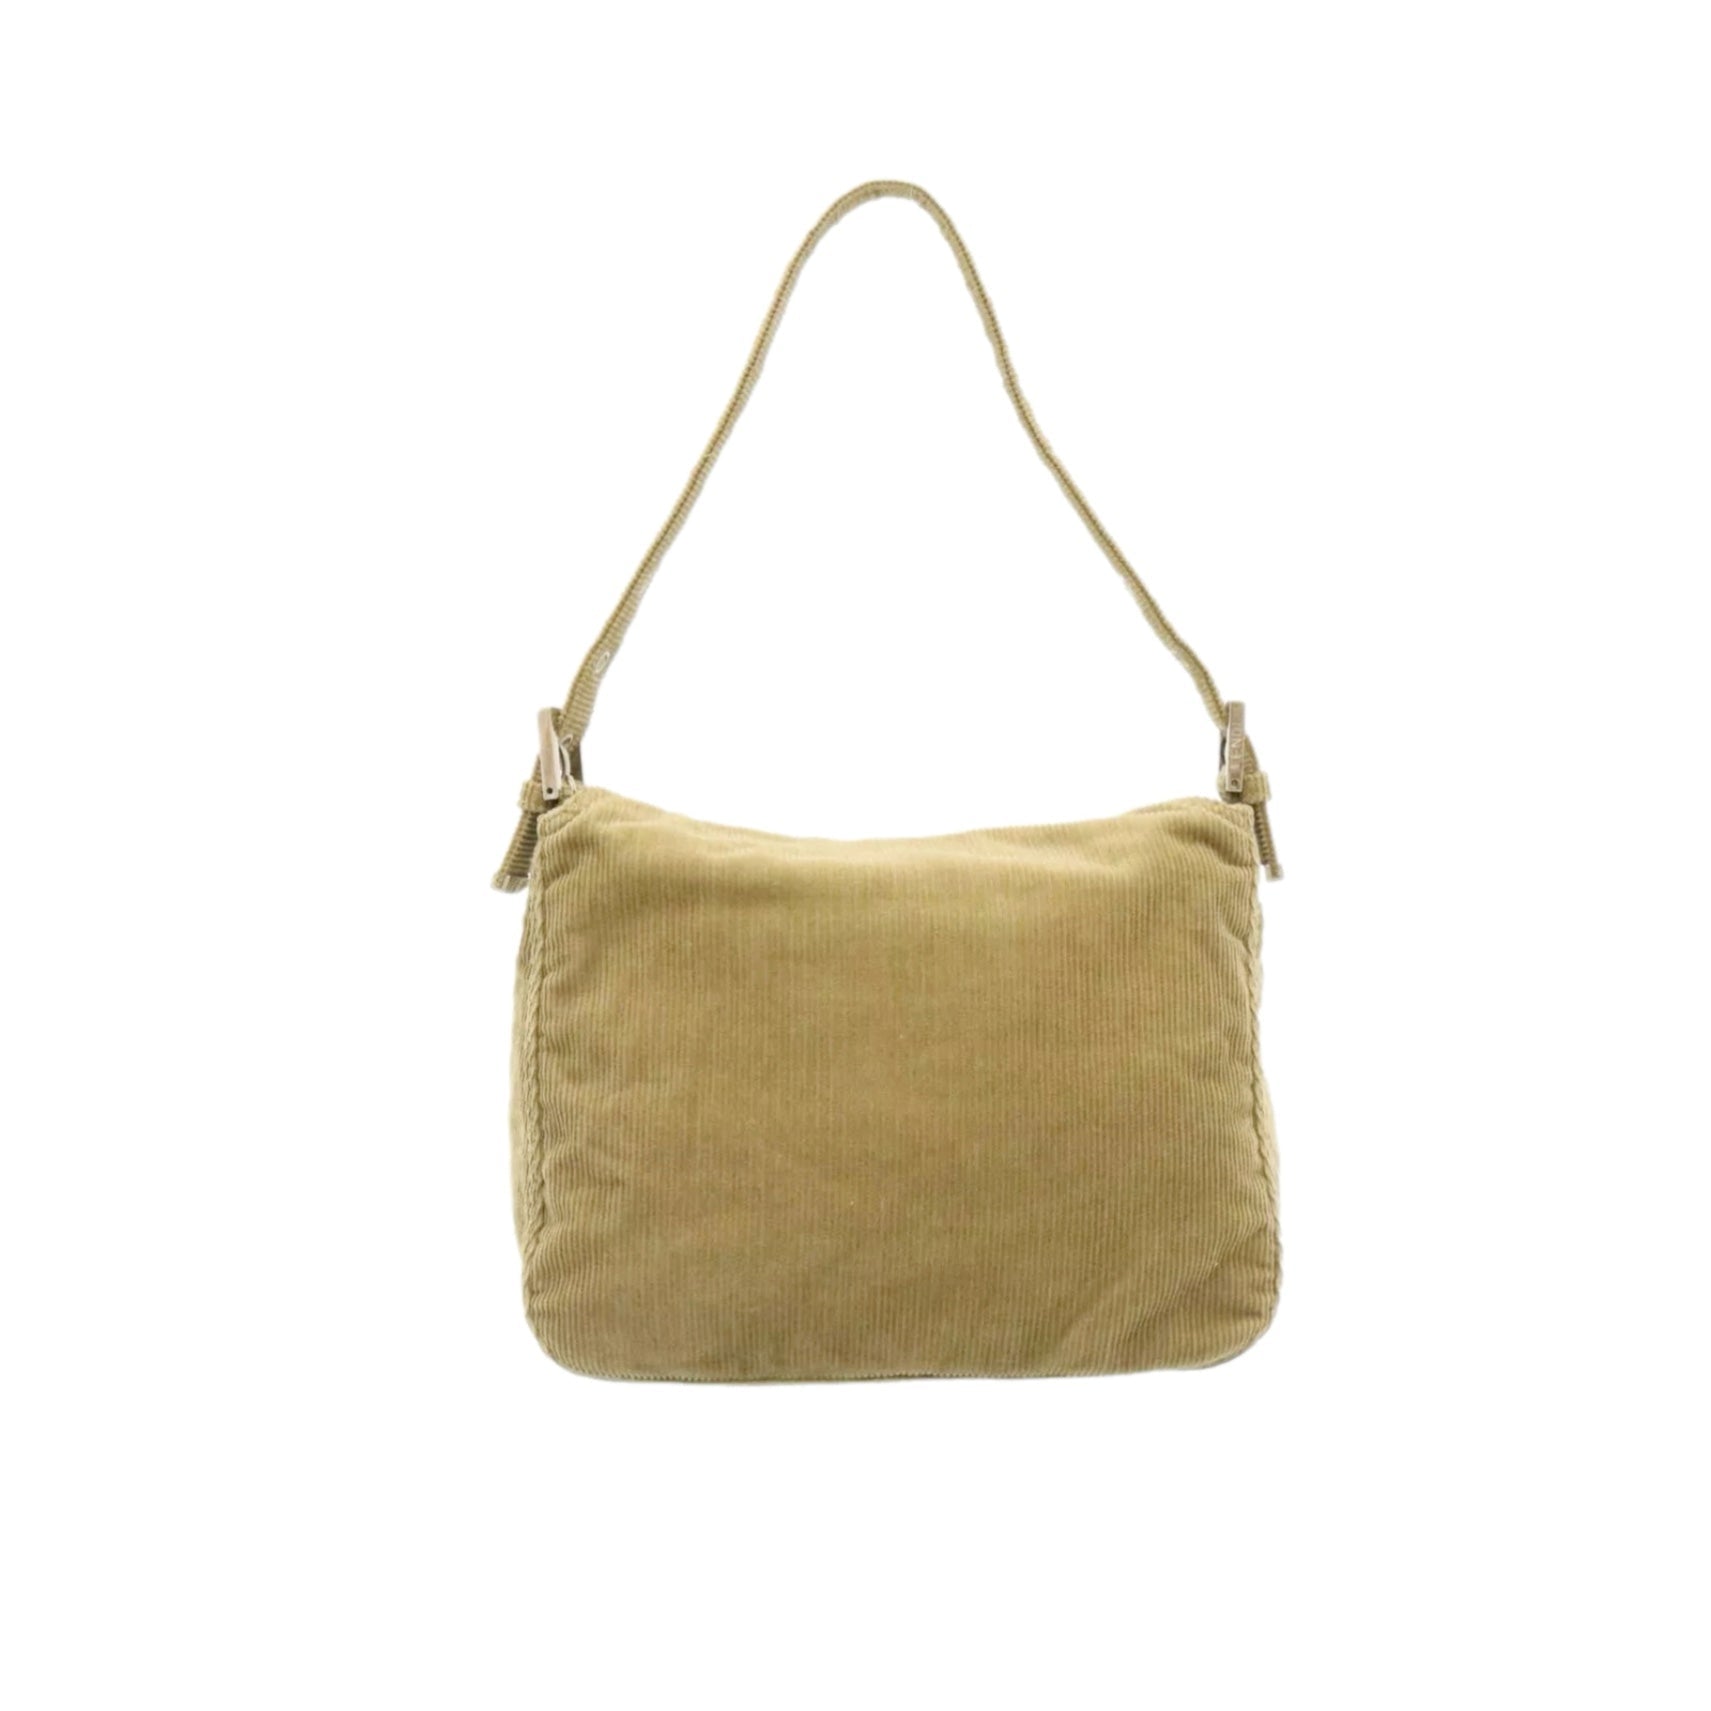 Fendi Tan Corduroy Shoulder Bag - Handbags